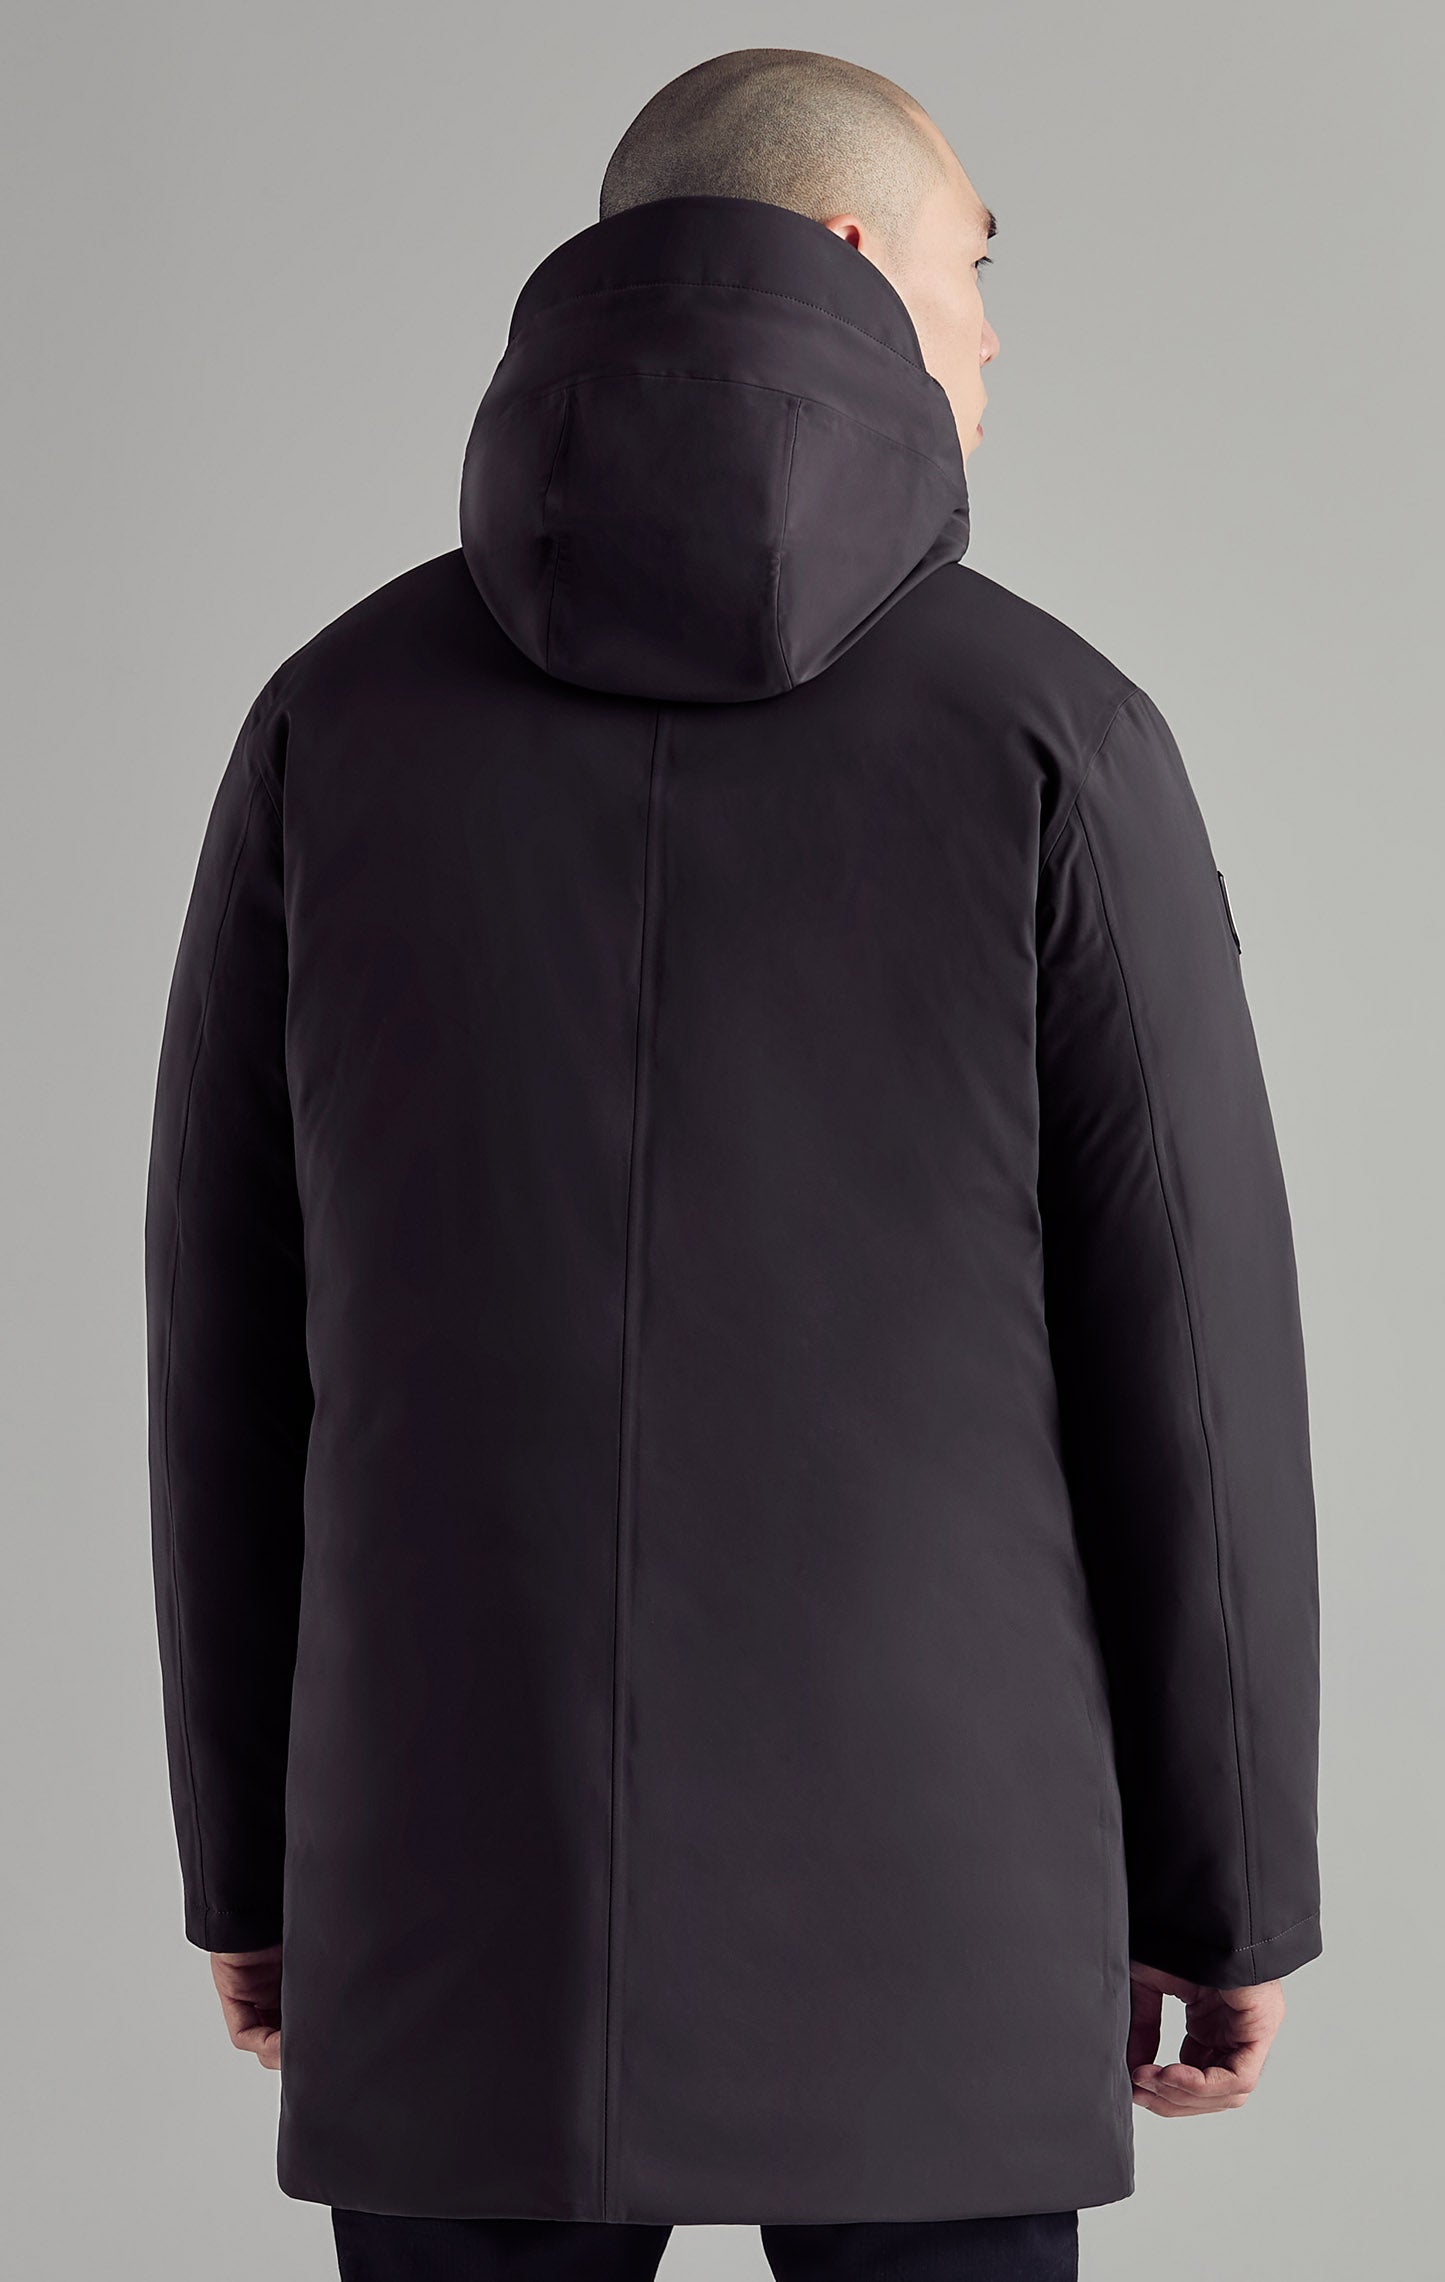 MIER Men's Lightweight Waterproof Rain Jacket with Hood, 2XL / Black